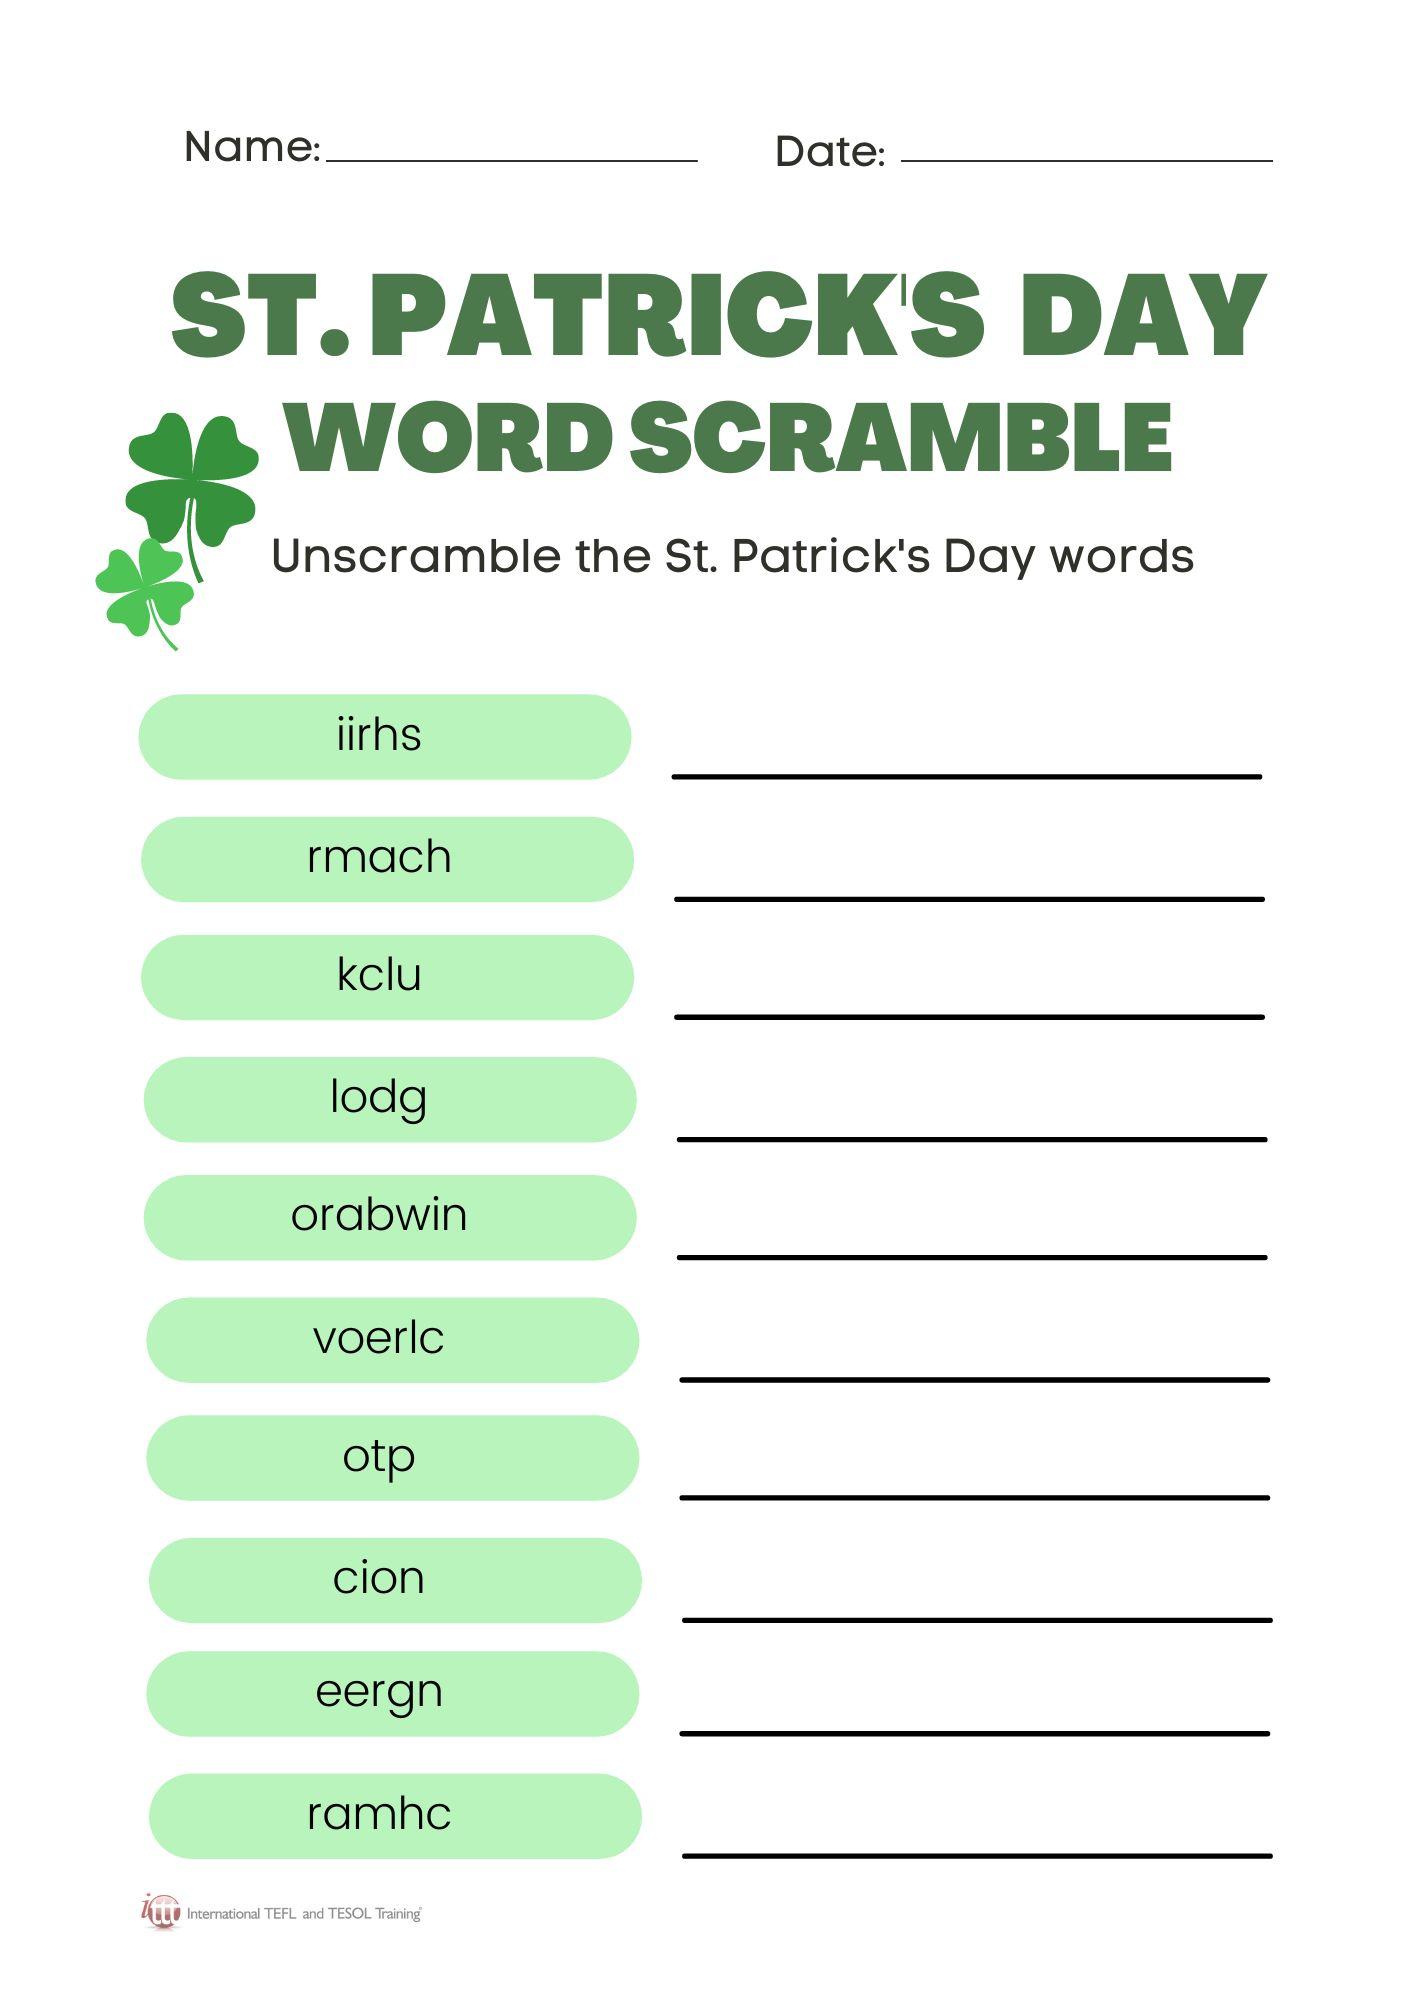 Grammar corner St. Patrick's Day Word Scramble